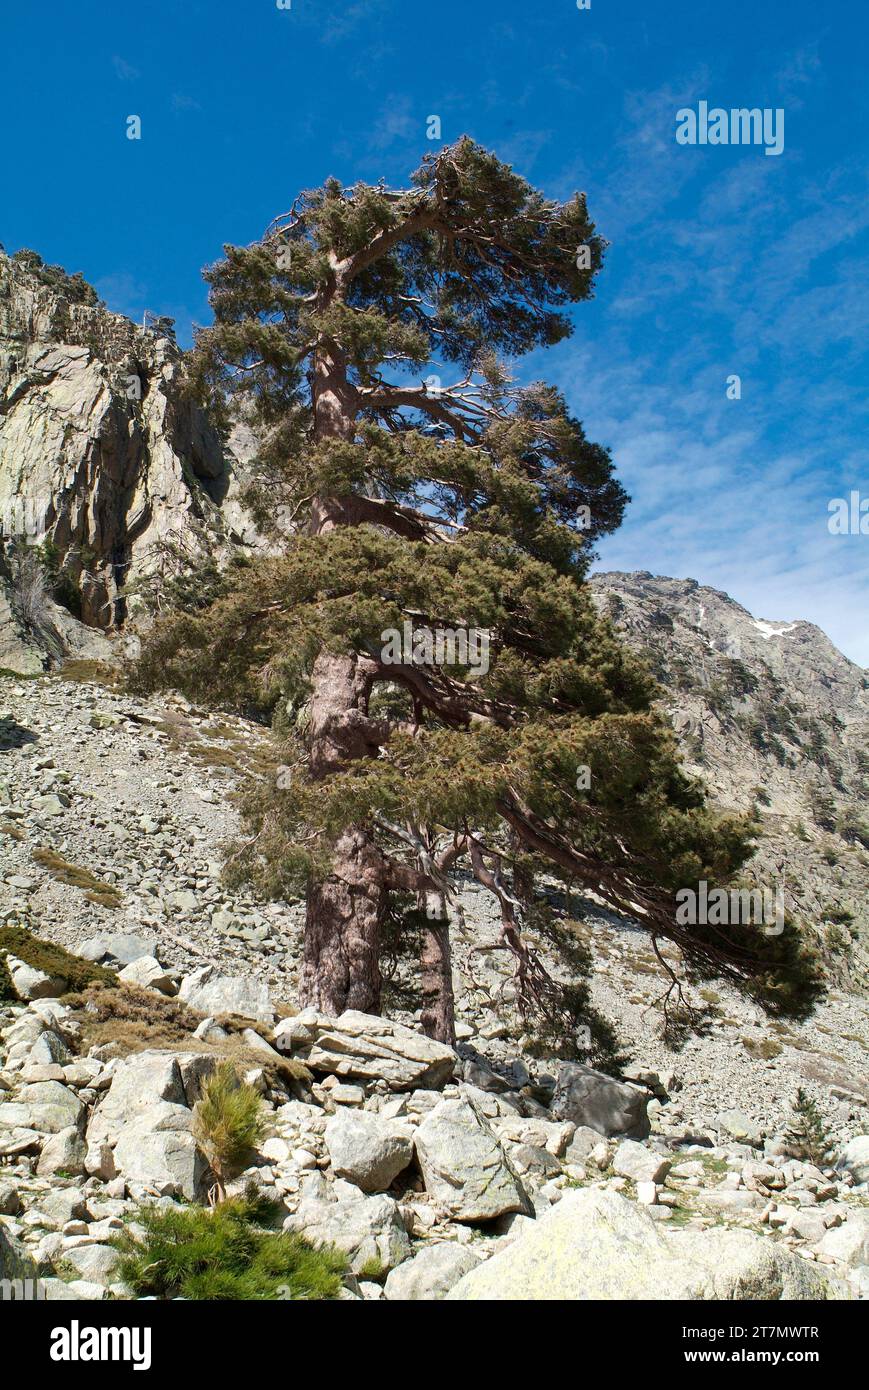 Pinus nigra corsicana or Pinus nigra salzmannii corsicana is an evergreen tree native to Corsica. This photo was taken in Asco, Corsica, France. Stock Photo